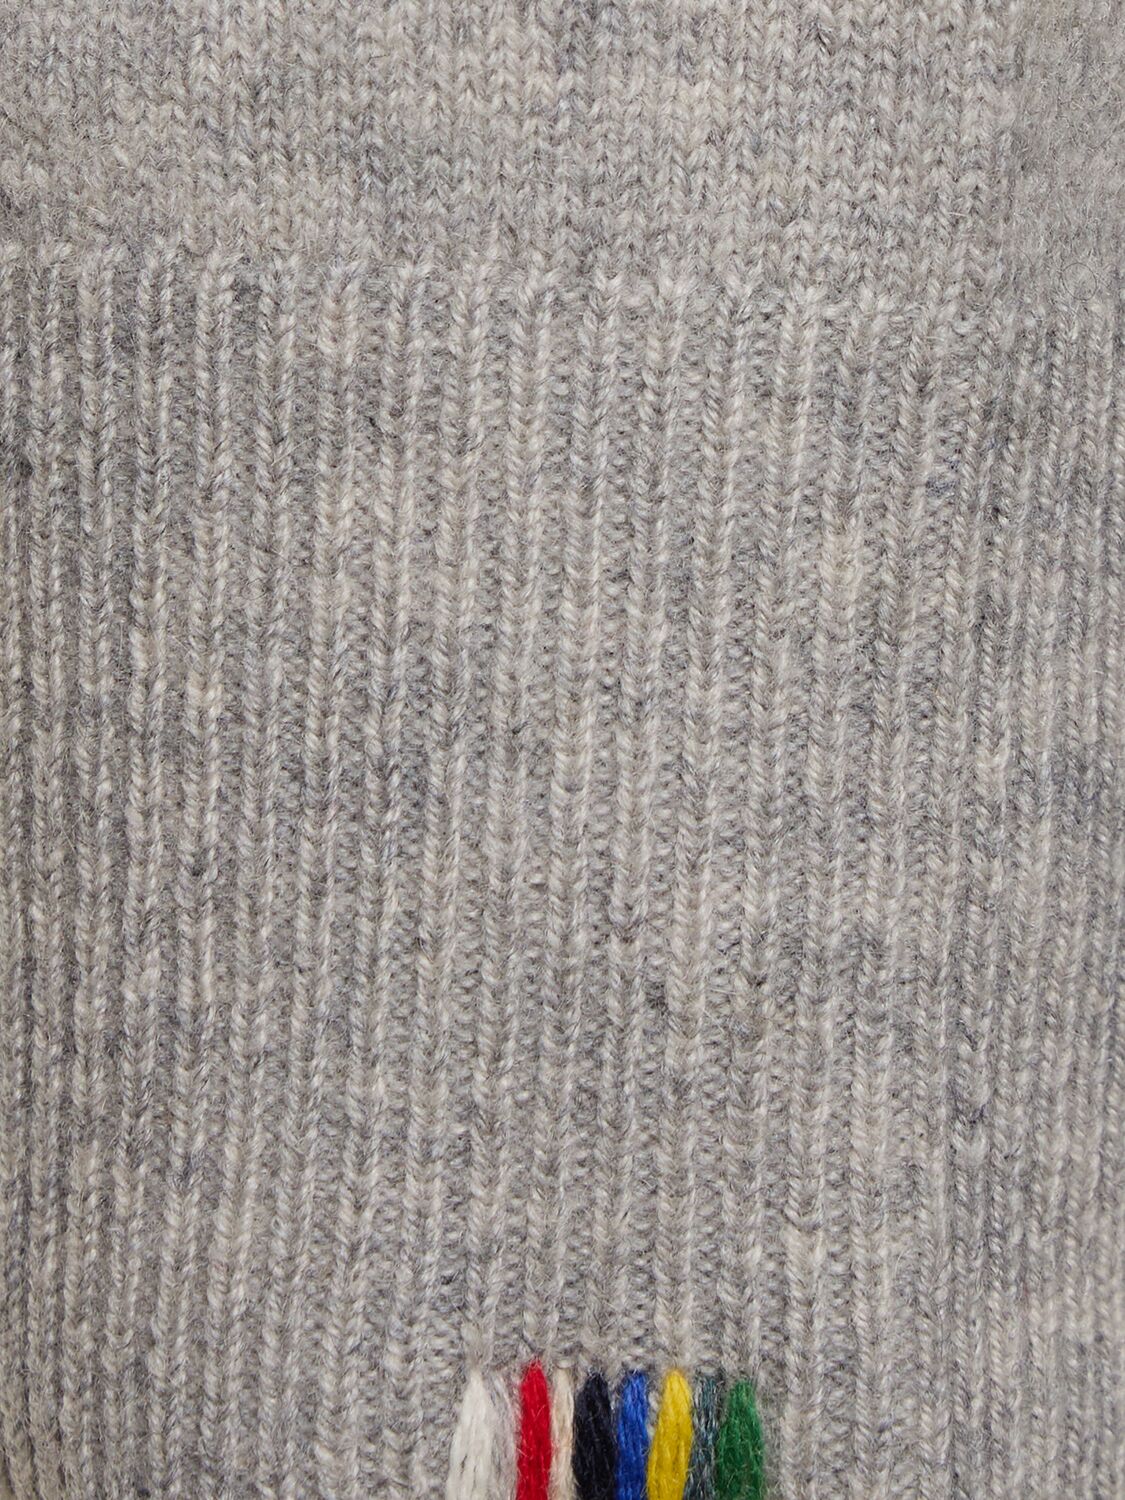 Shop Extreme Cashmere Clash Cashmere Blend V Neck Sweater In Grey